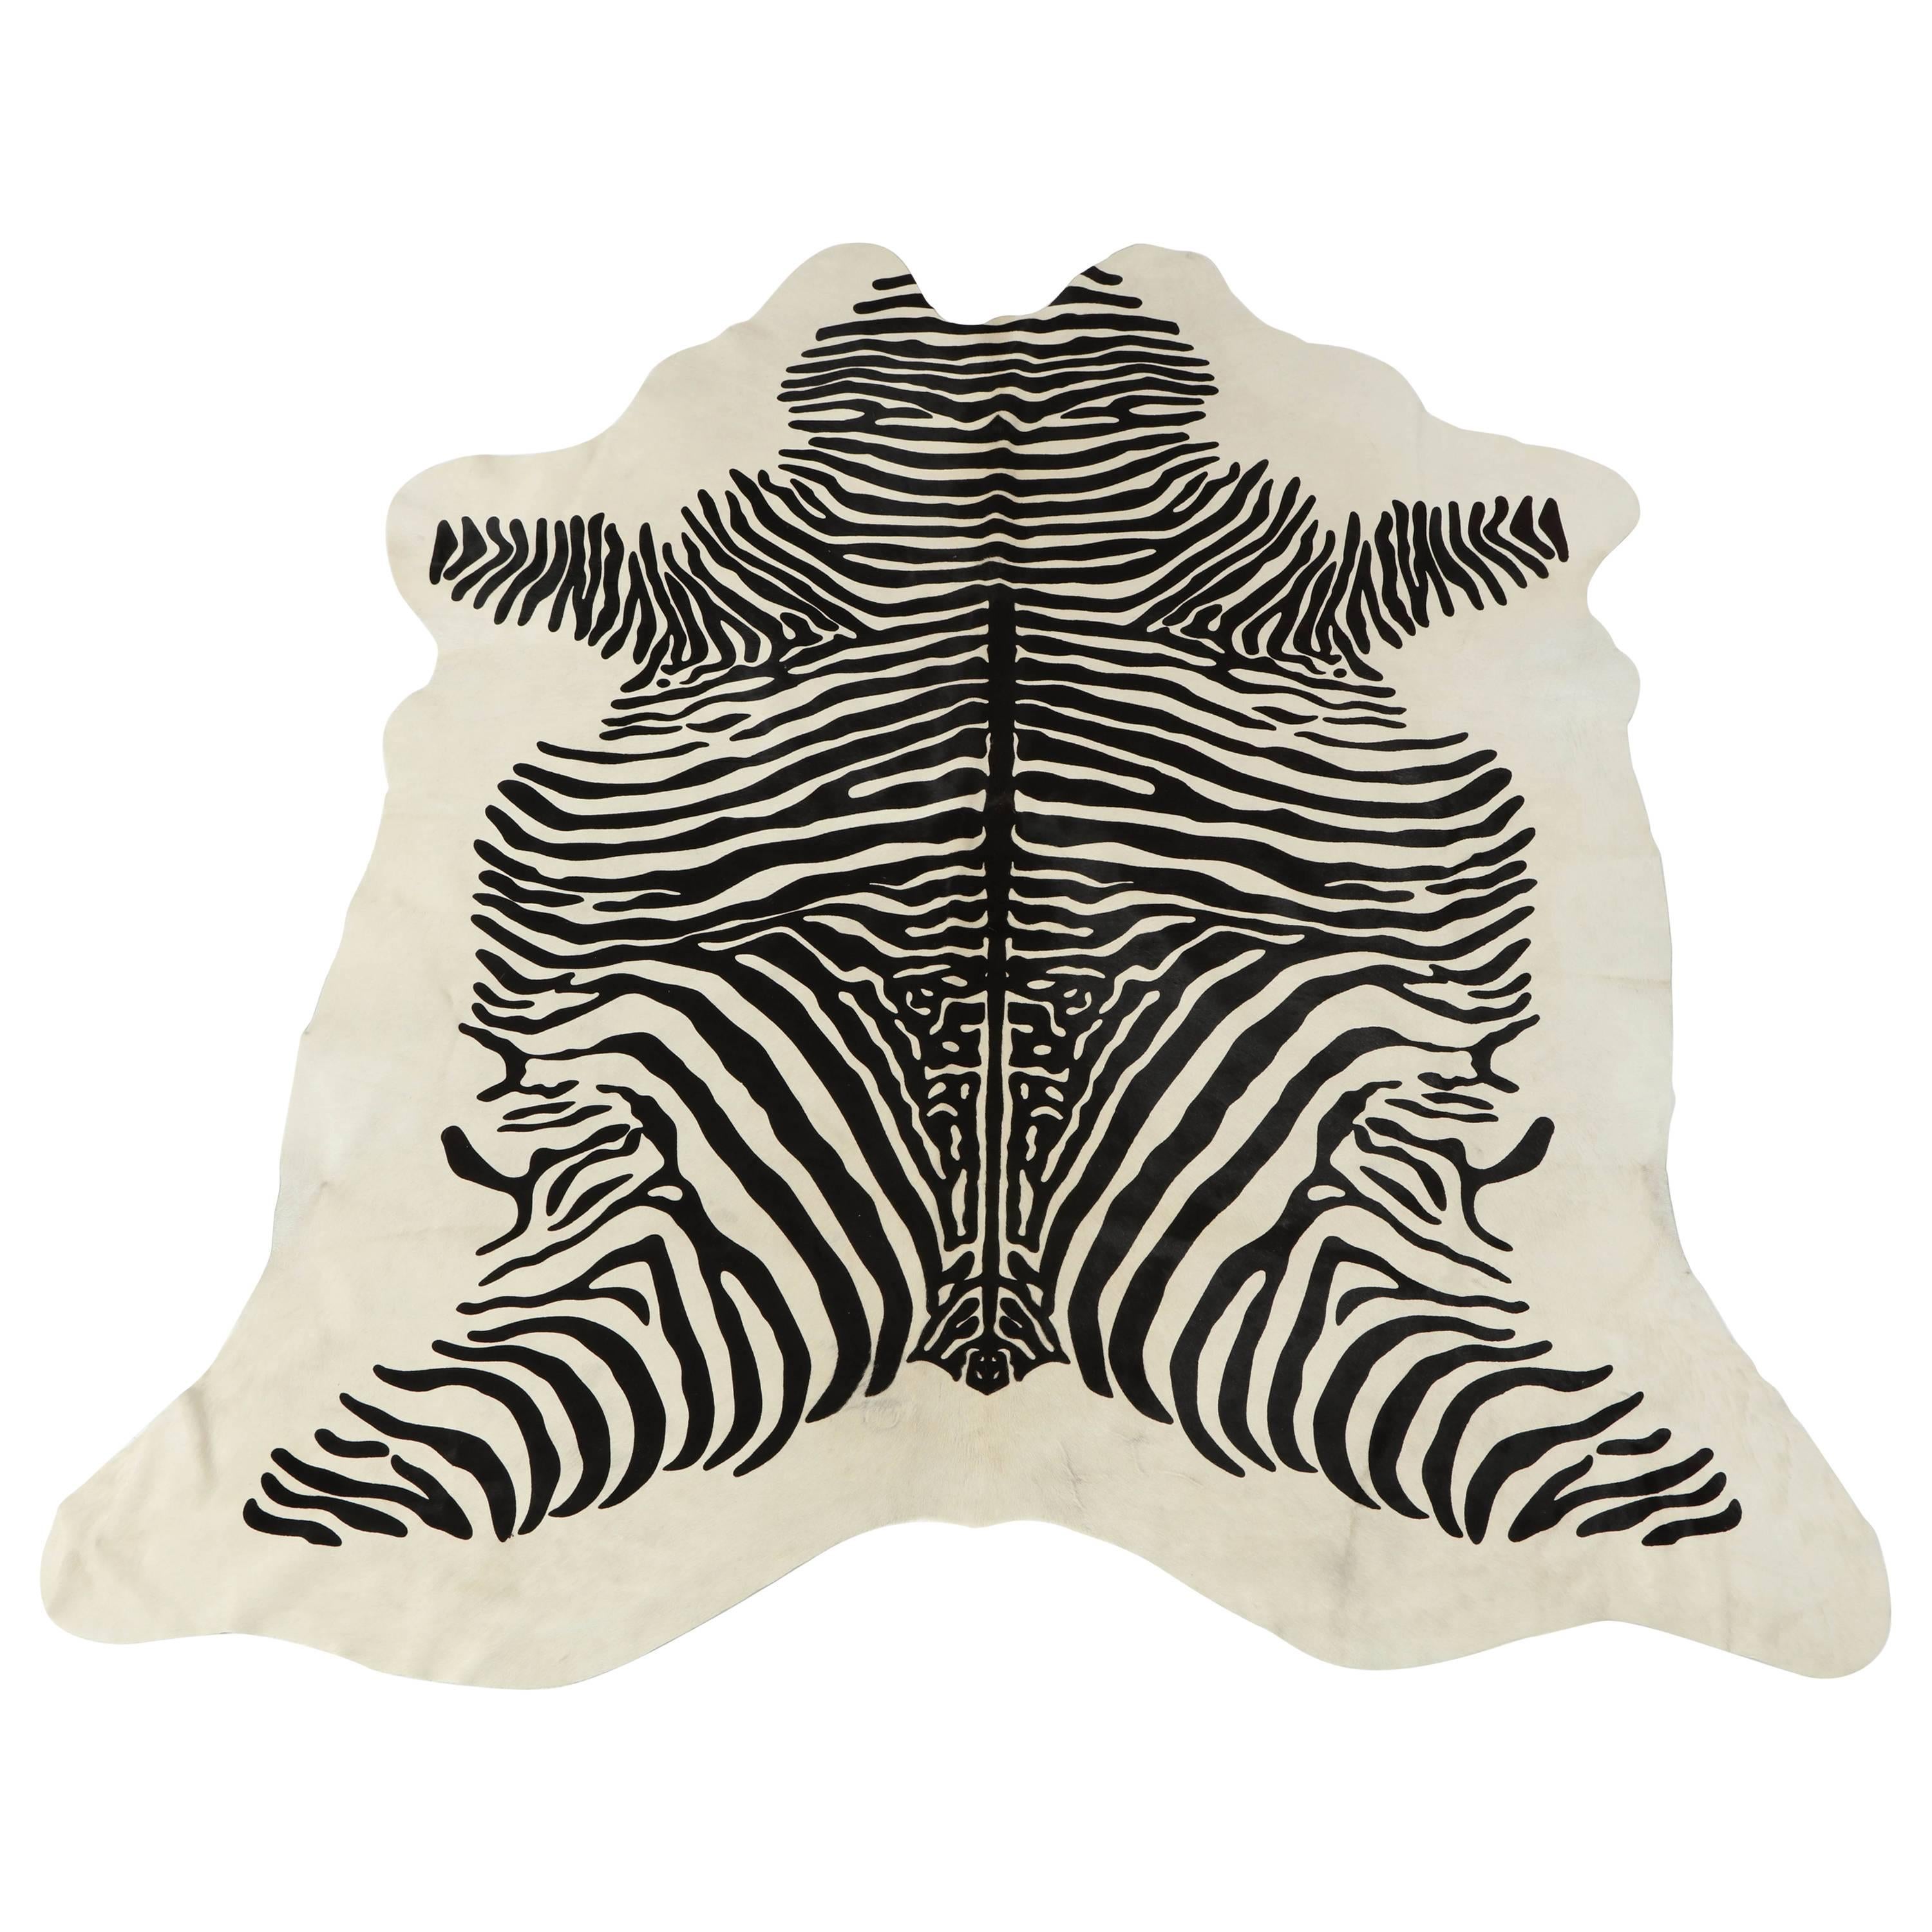 Contemporary Stenciled Zebra Print Brazilian Cowhide Rug, 2016